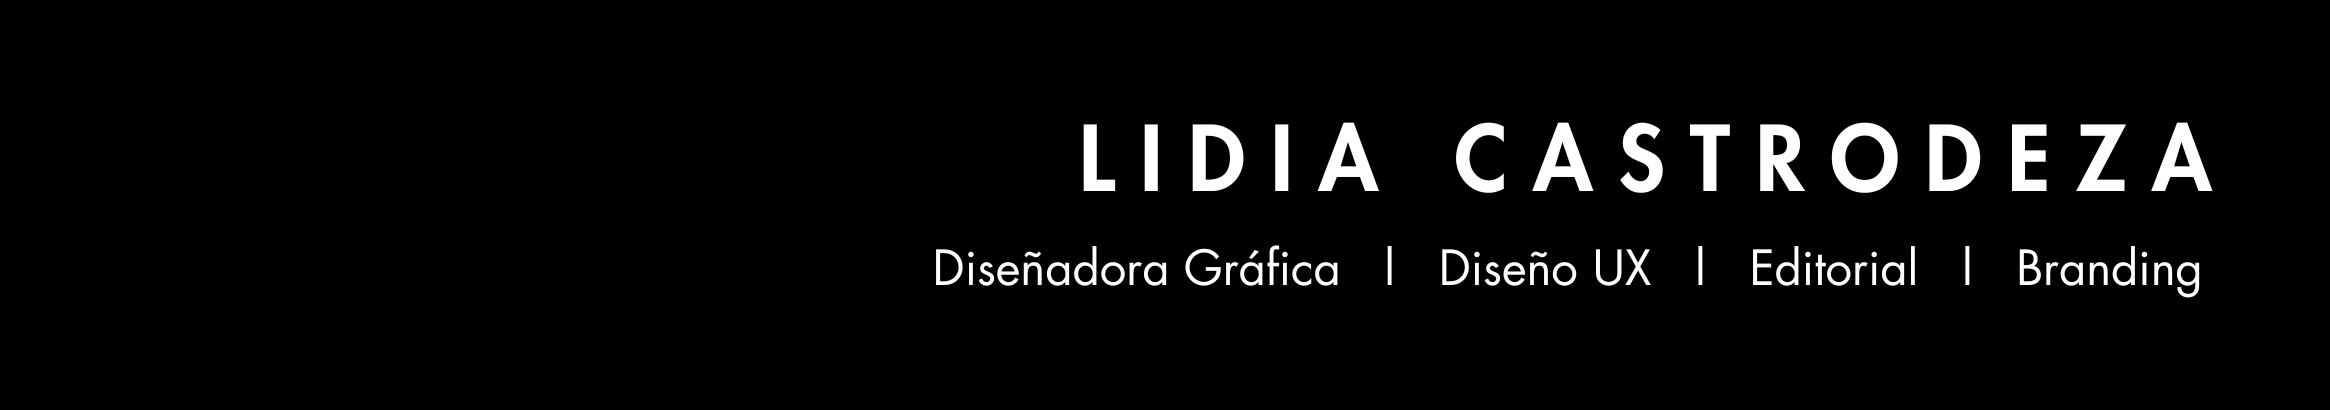 Lidia Castrodeza Chica のプロファイルバナー